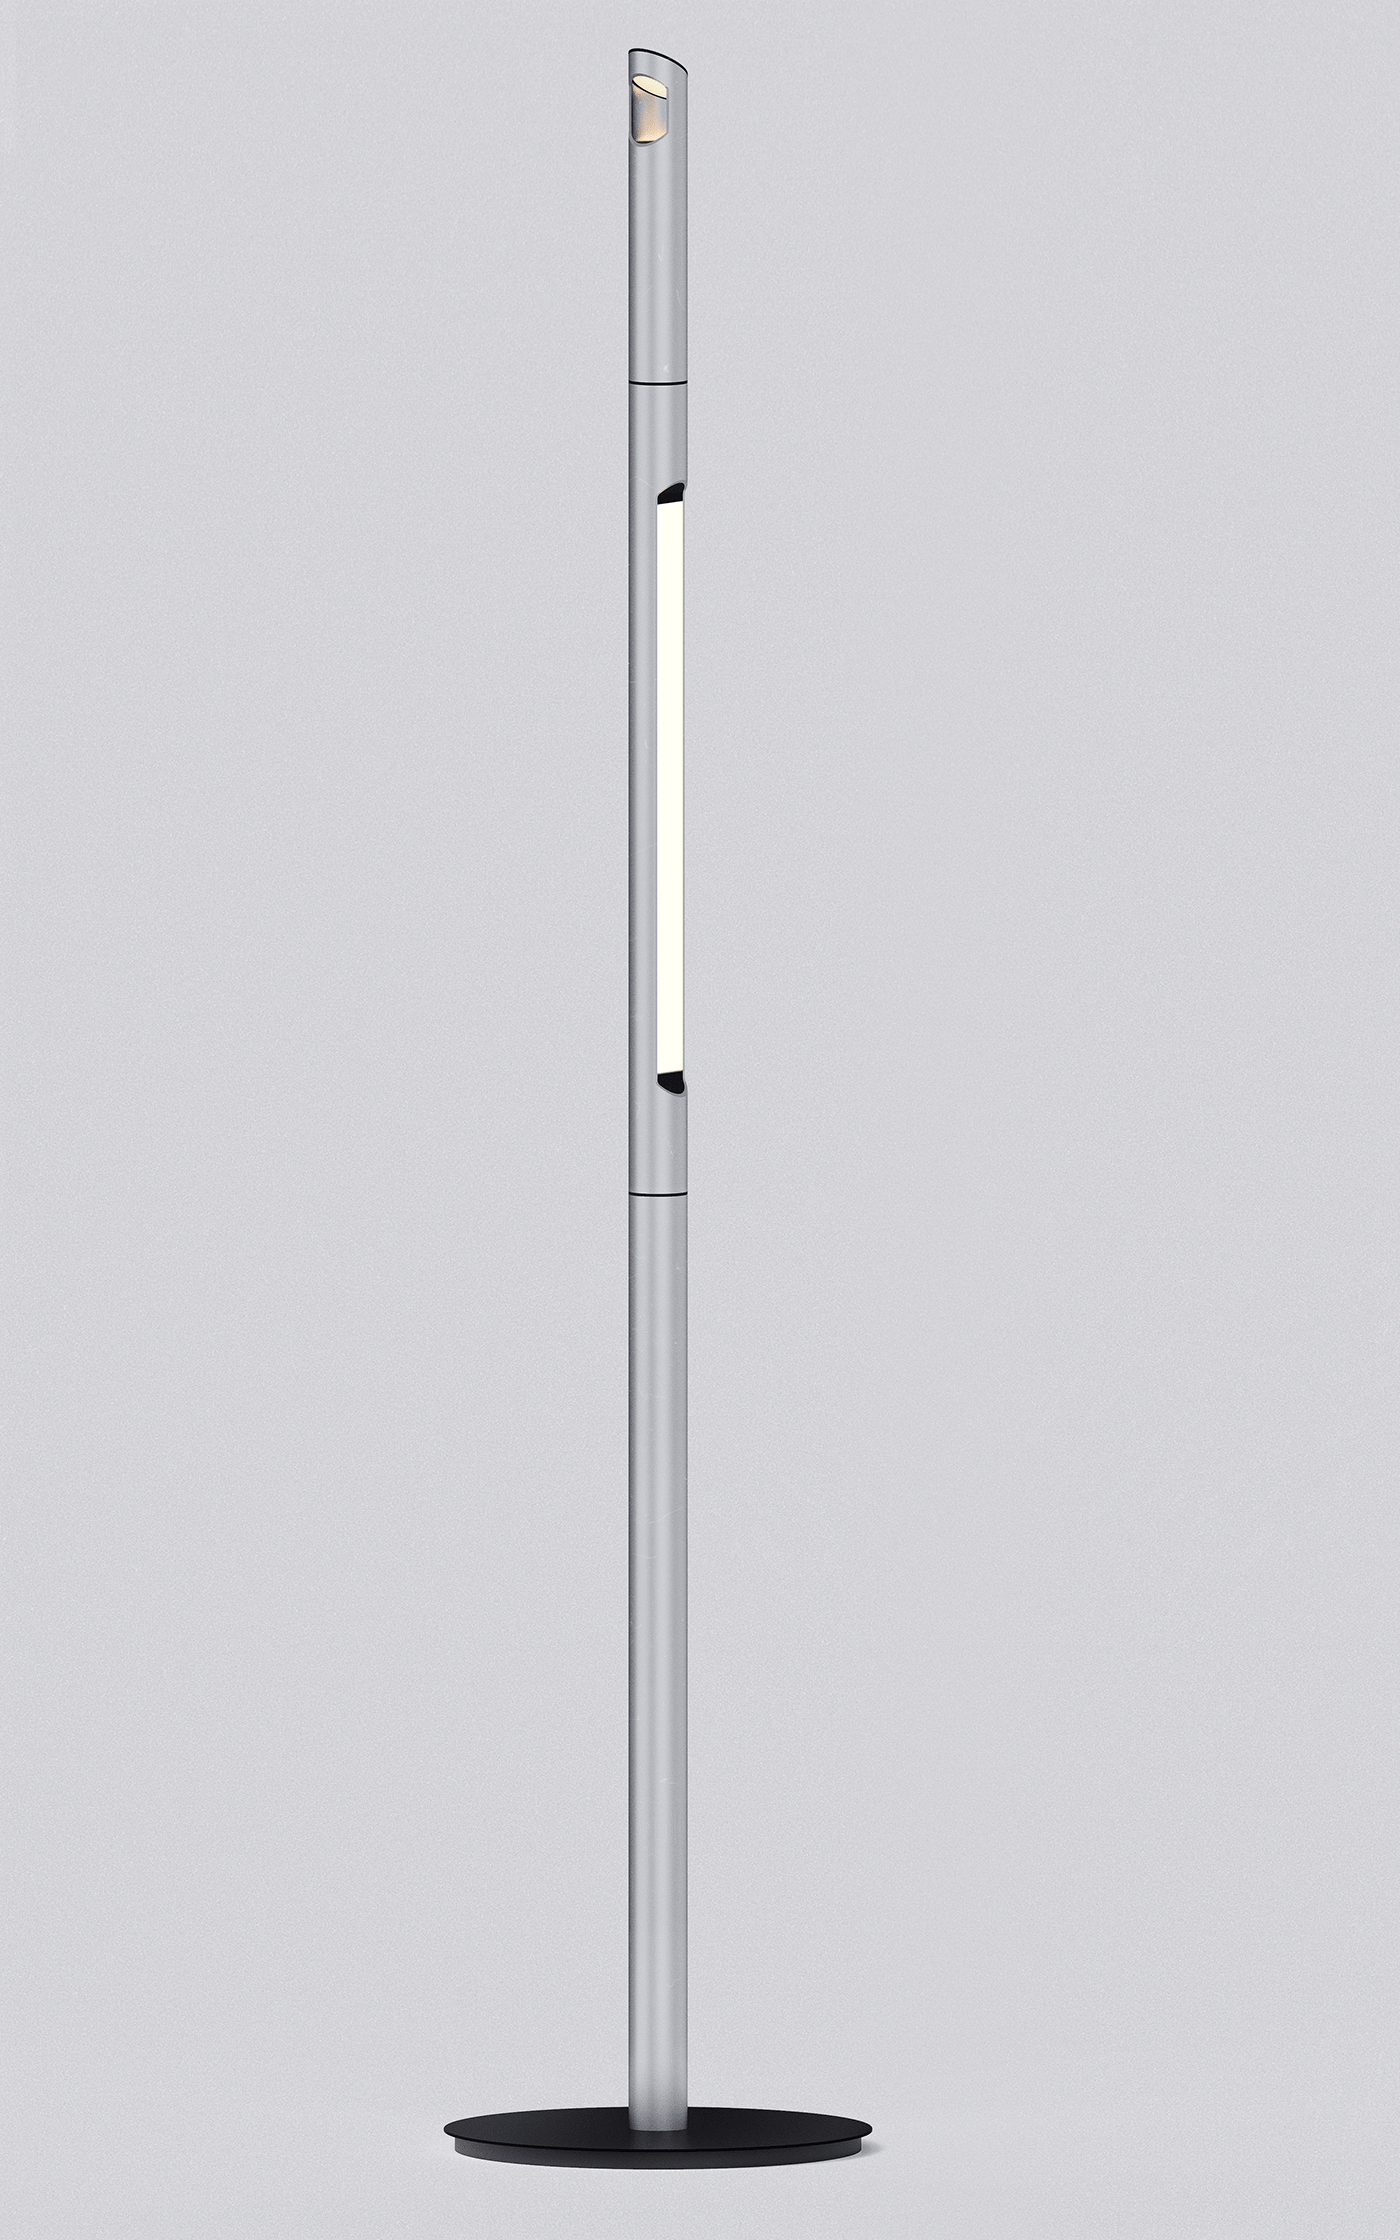 Lighting Design  indoor lighting lamp design modular design standing lamp modern lamp rotatable aluminum Student design prototype